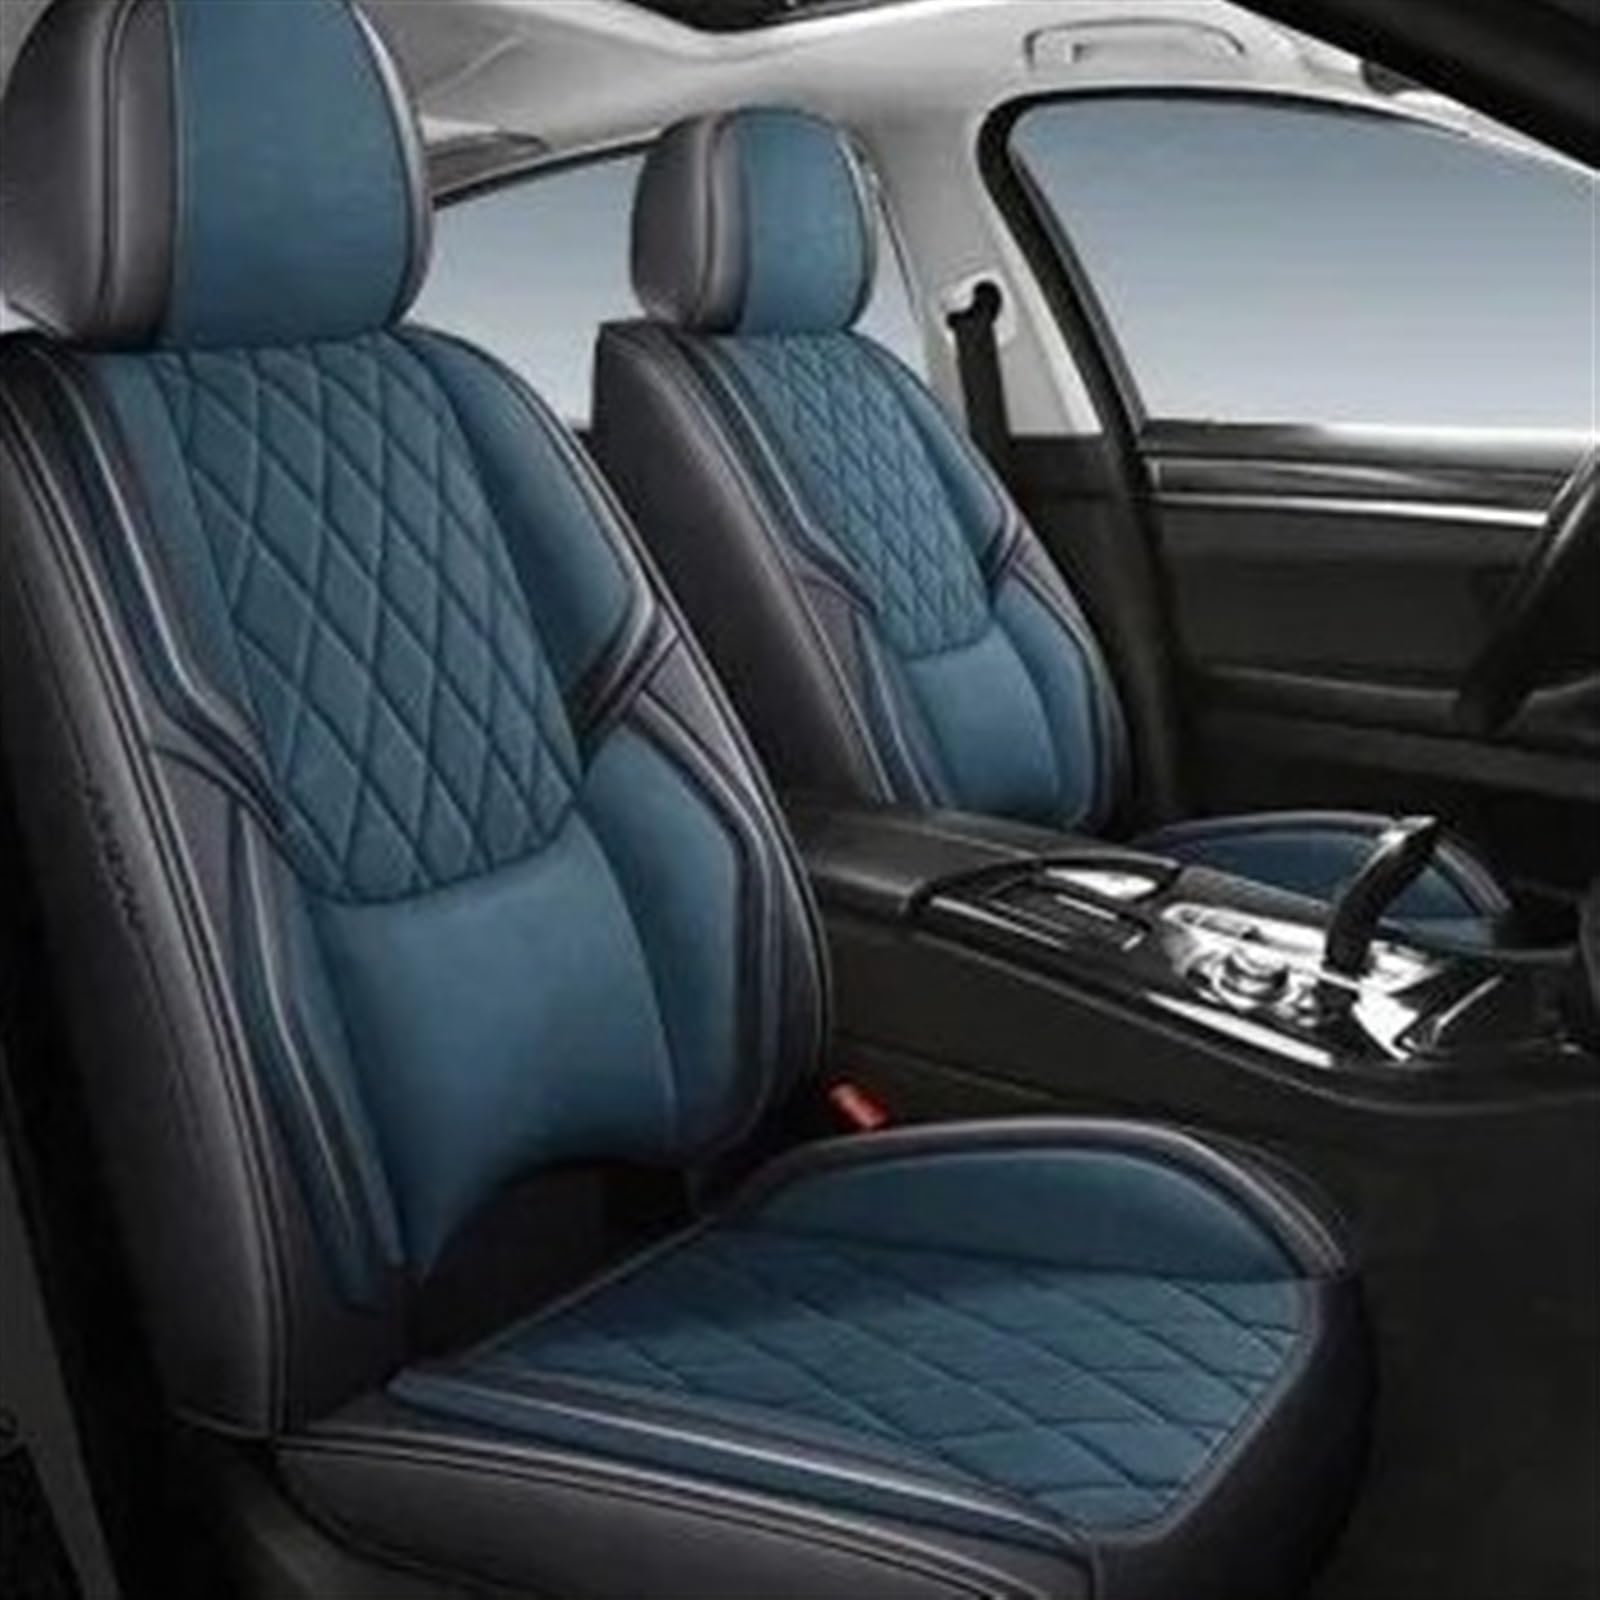 AXTAZS Auto Sitzbezügesets Kompatibel Mit Subaru Für XV 2011 2012 2013 2014 2015 2016 2017 2018 2019 2020 2021 2022 2023 5 Sitzplätze Autositzbezug Autositzmattenbezug Auto-Innenraumbezüge(4) von AXTAZS